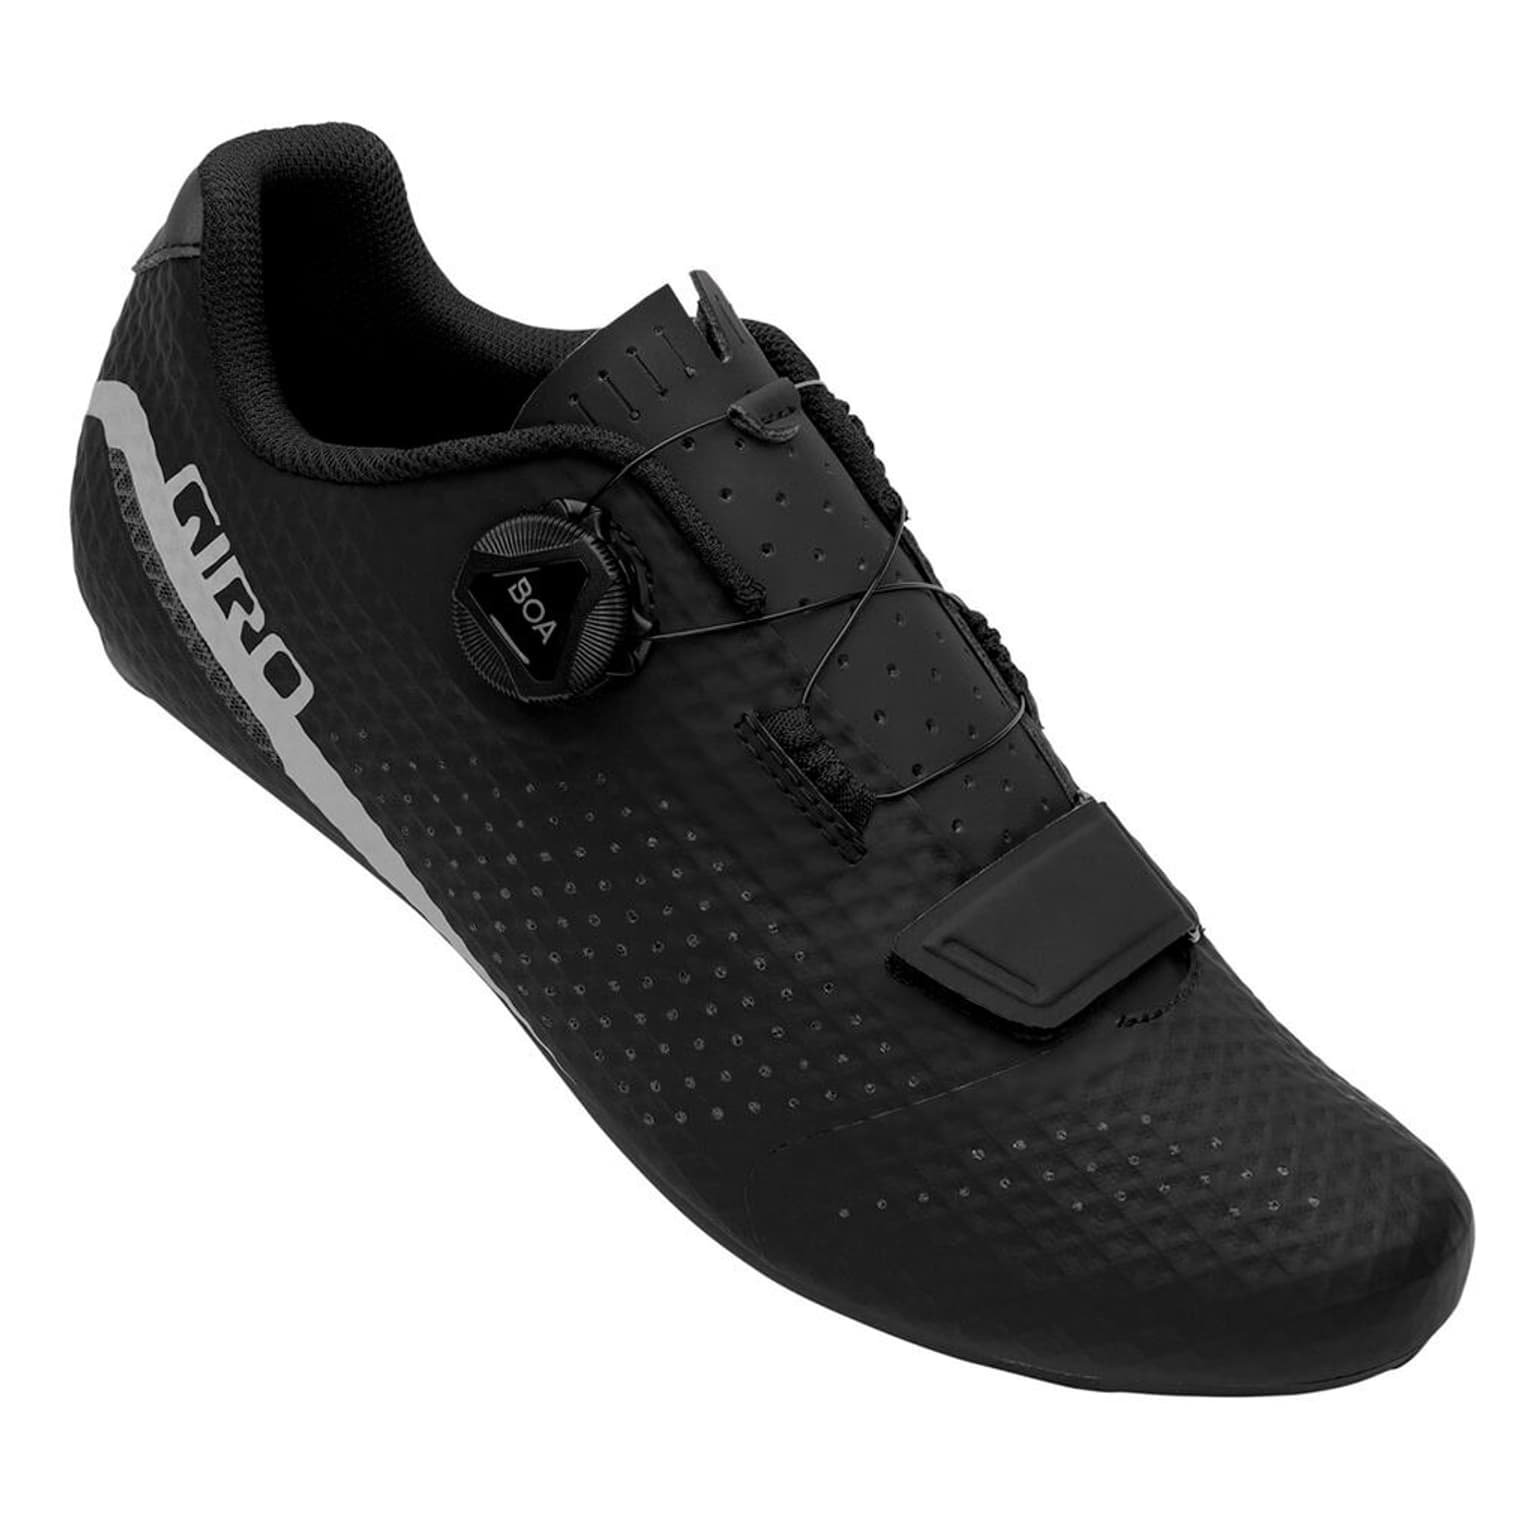 Giro Giro Cadet Shoe Chaussures de cyclisme noir 2